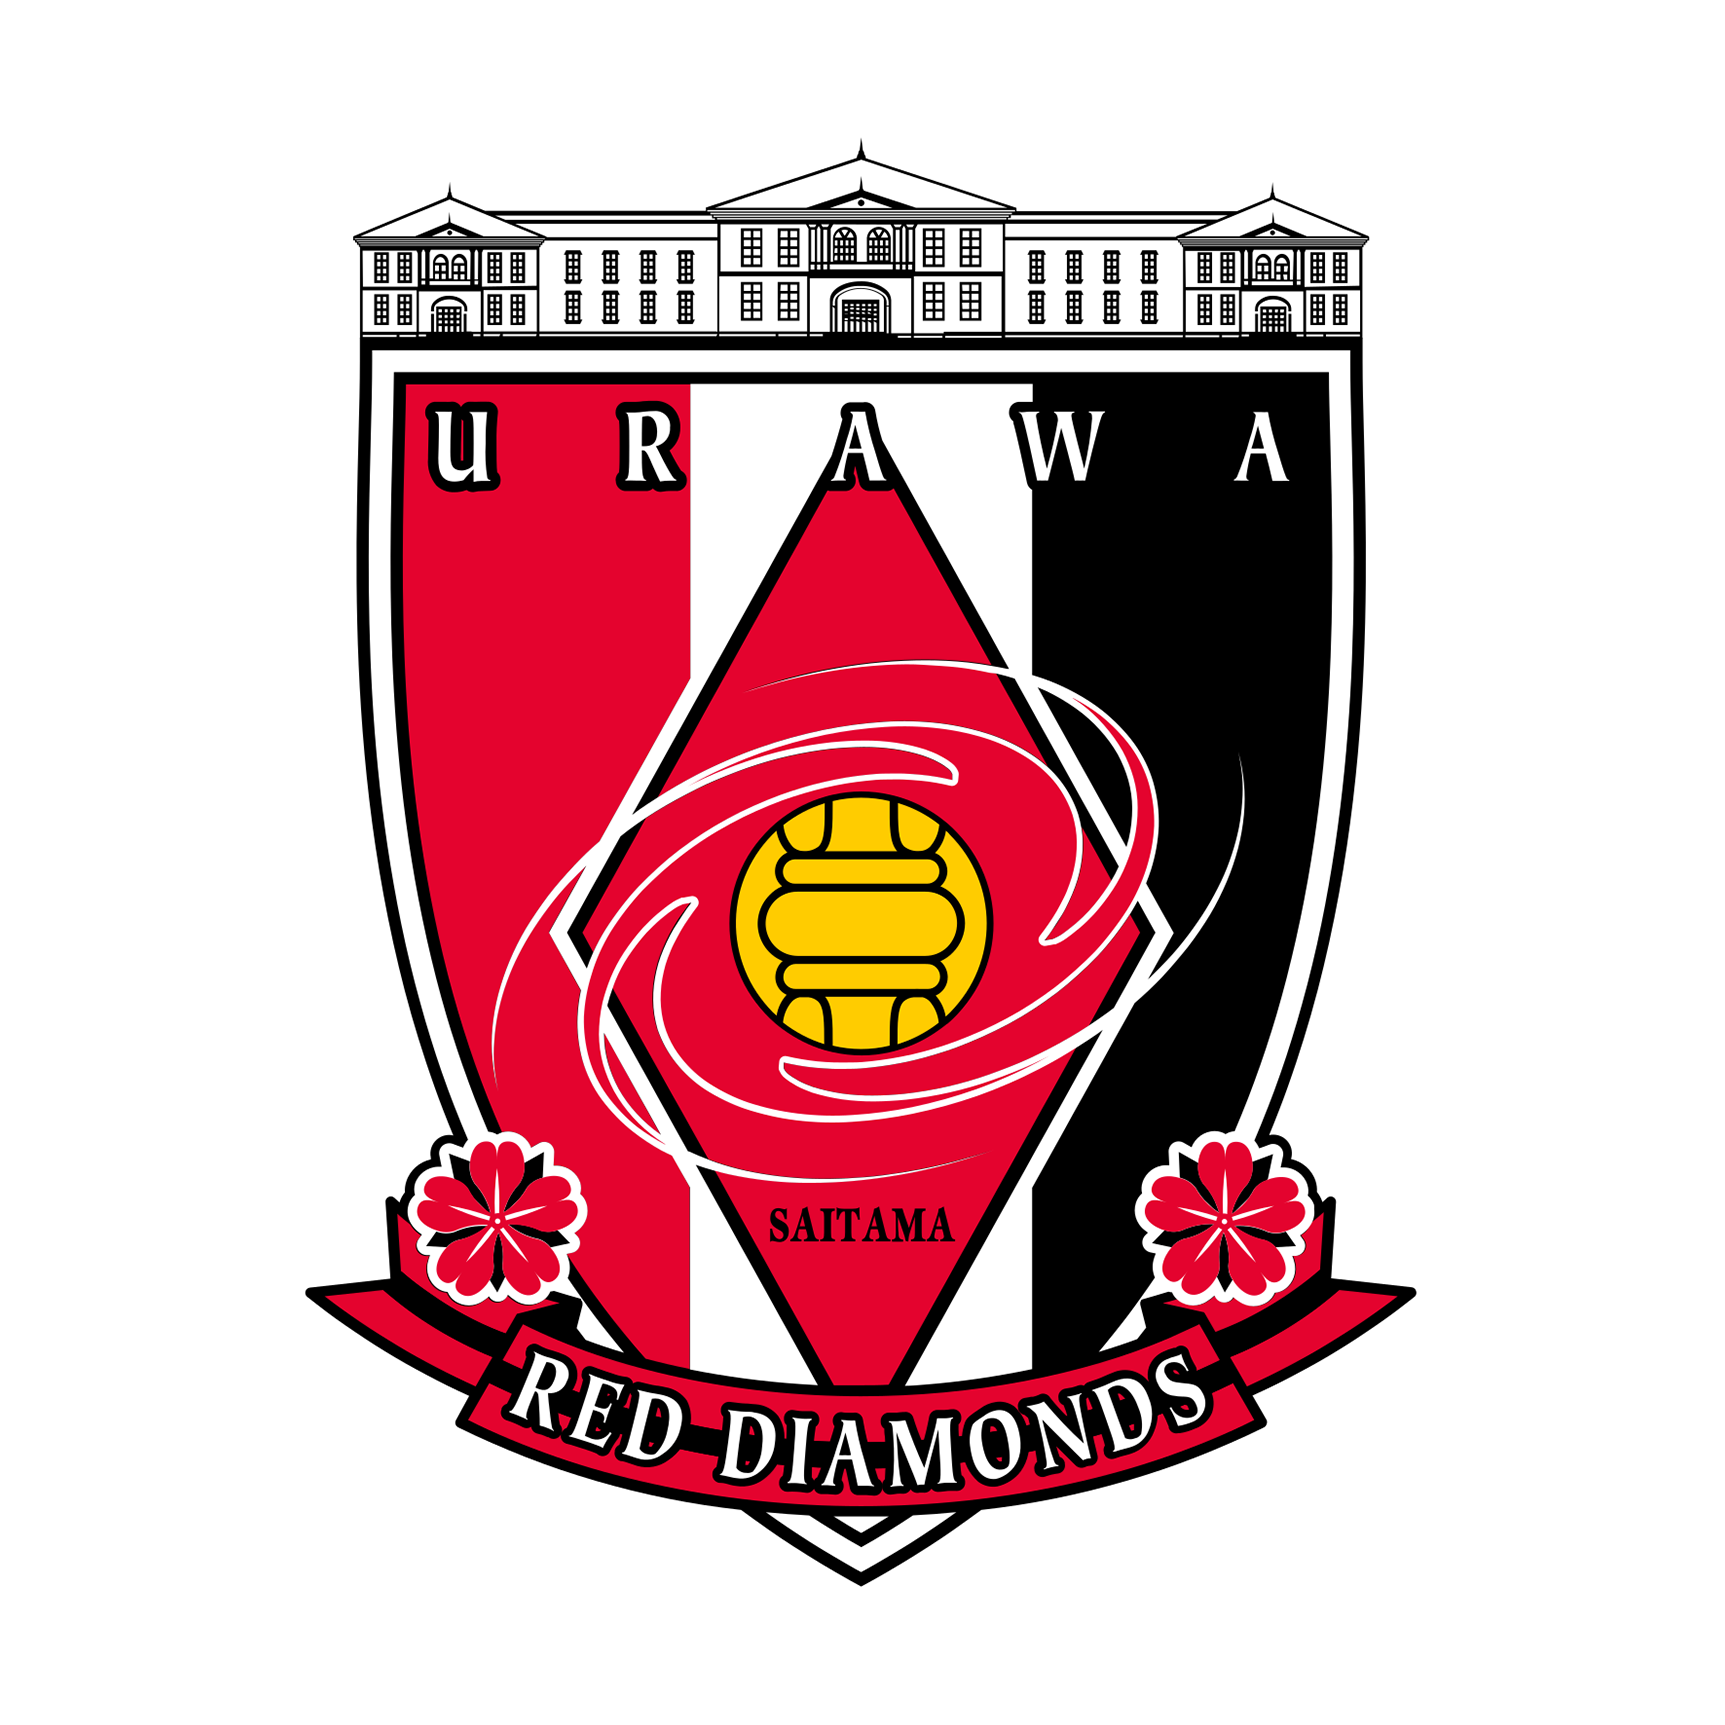 Urawa Red Diamonds crest image 